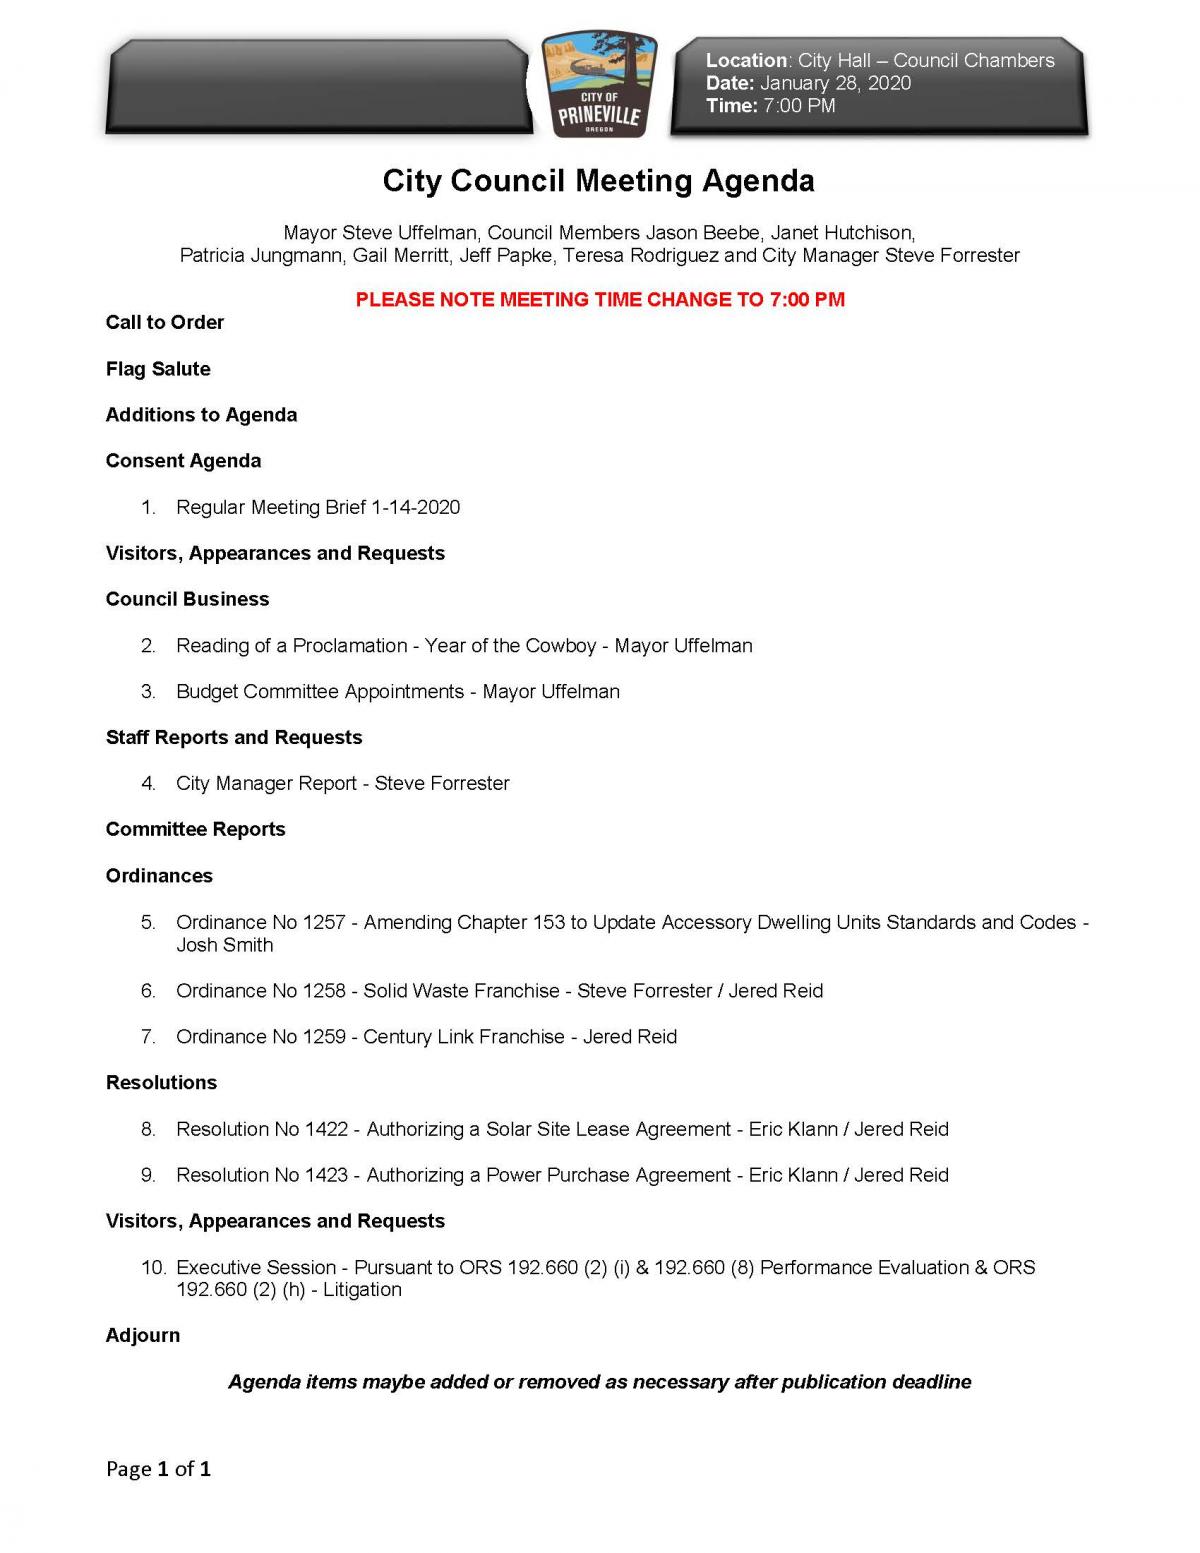 Council Meeting Agenda 1-28-2020